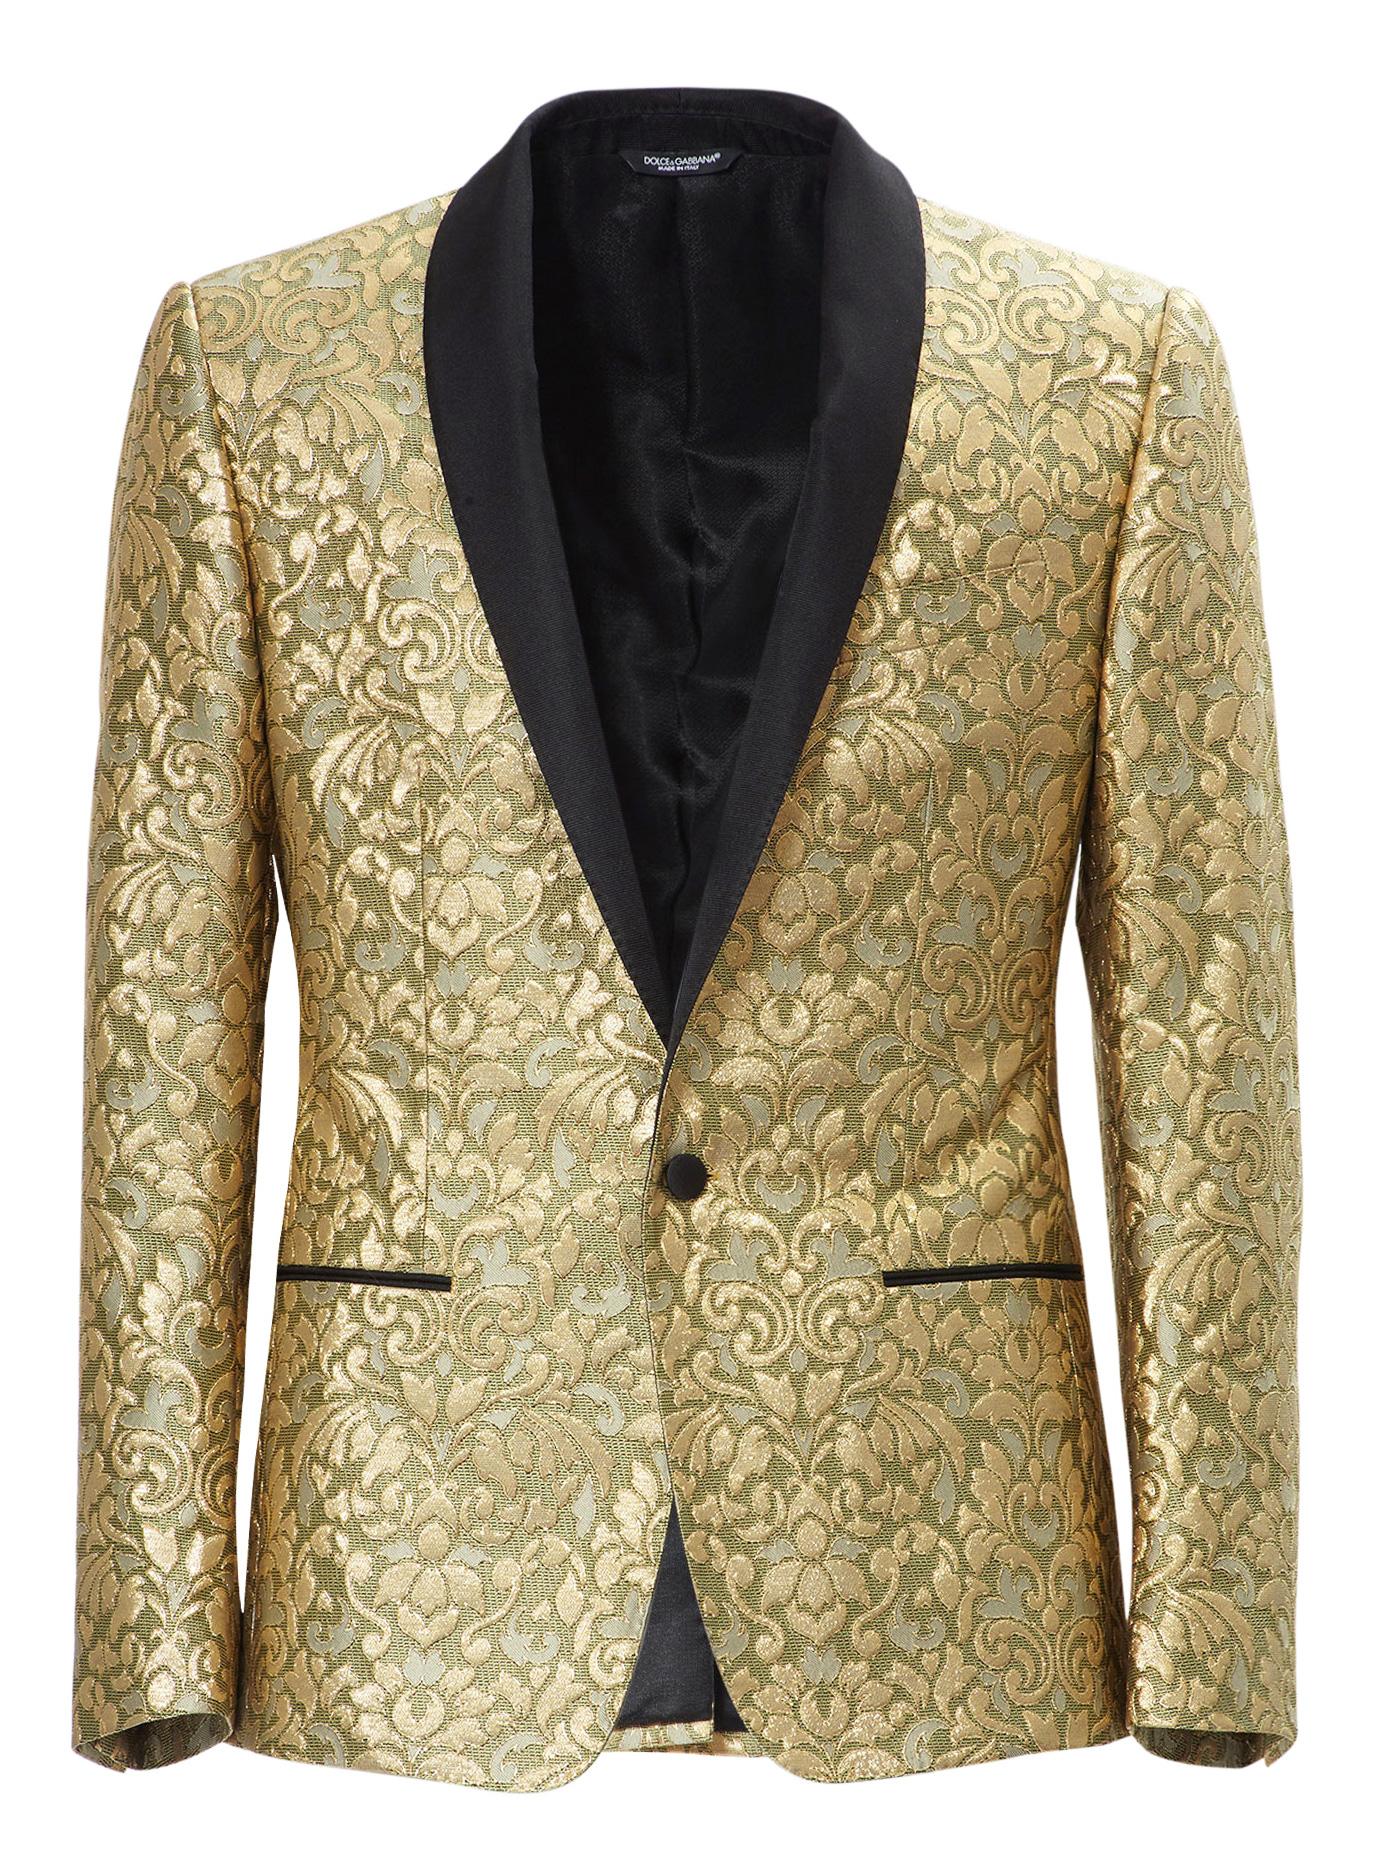 Lyst - Dolce & Gabbana Brocade Tuxedo Jacket in Metallic for Men